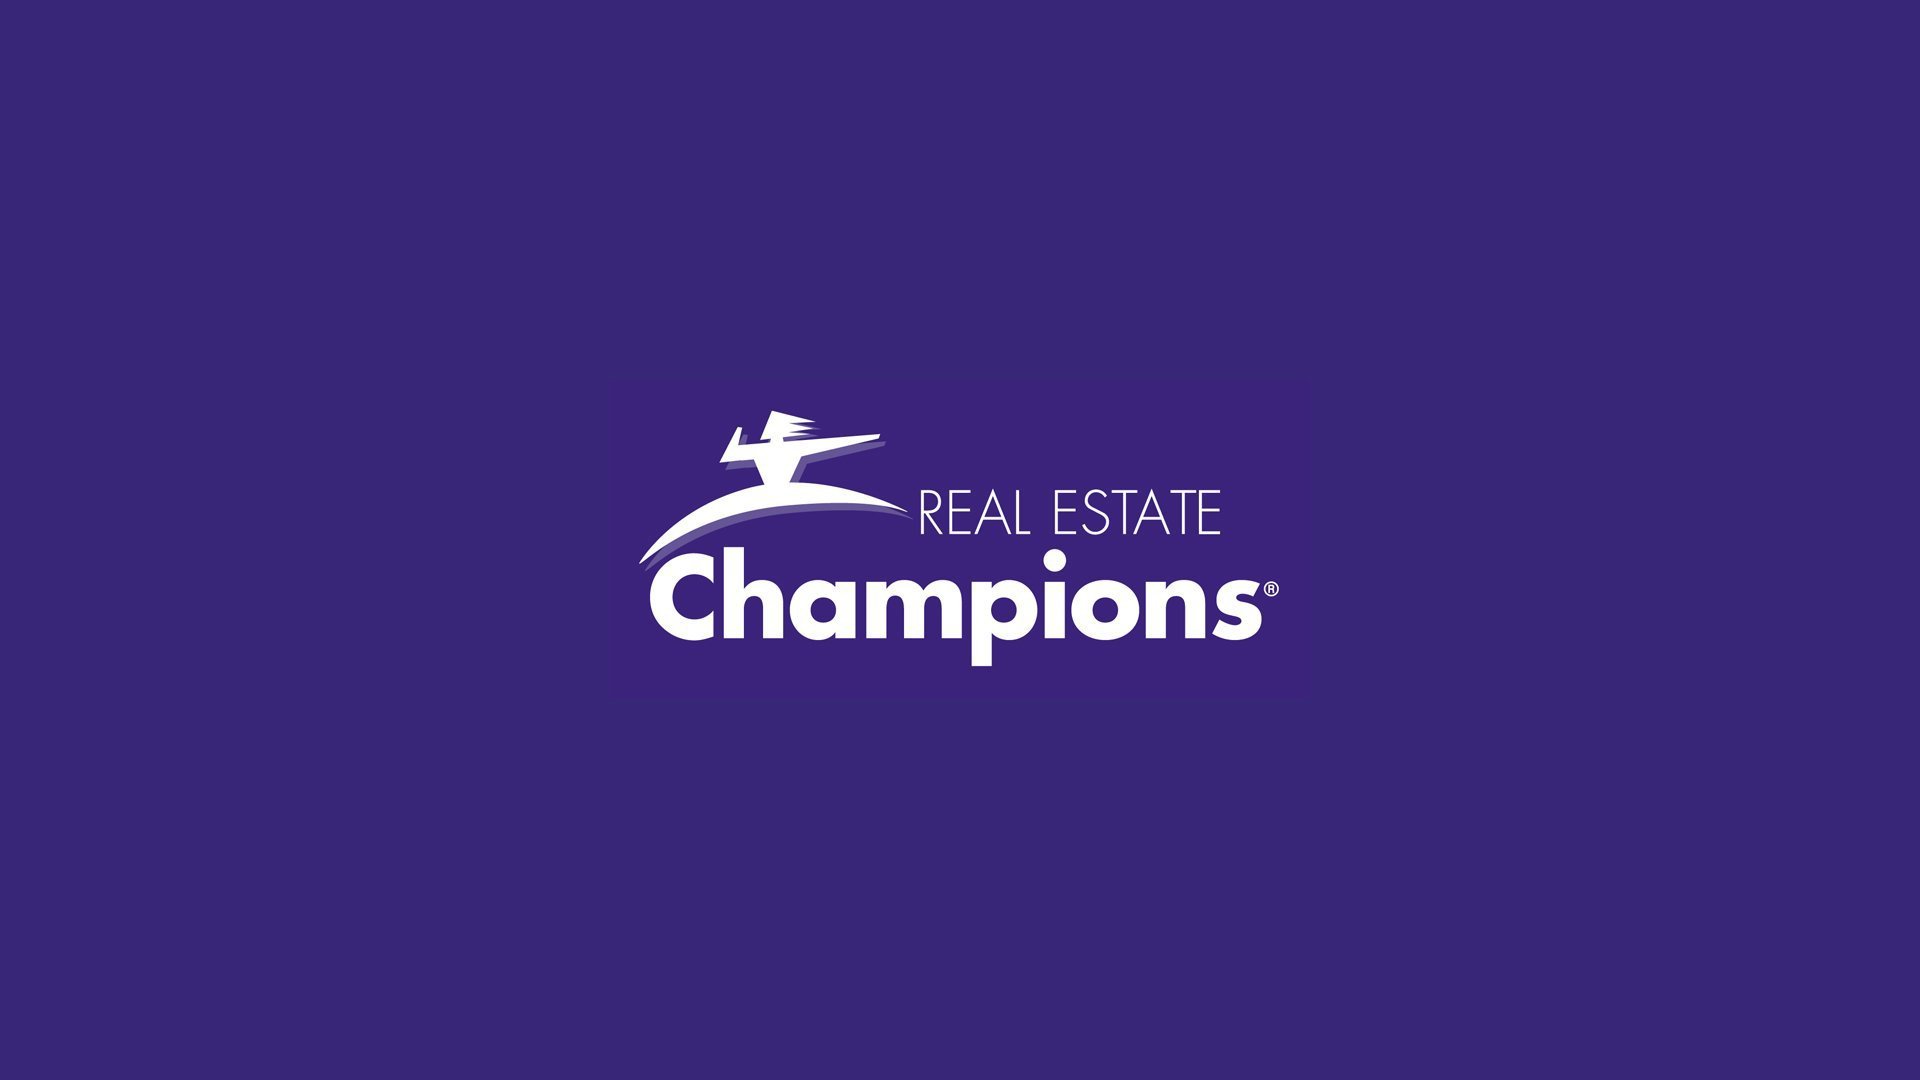 Real Estate Champions' brandmark on a purple background